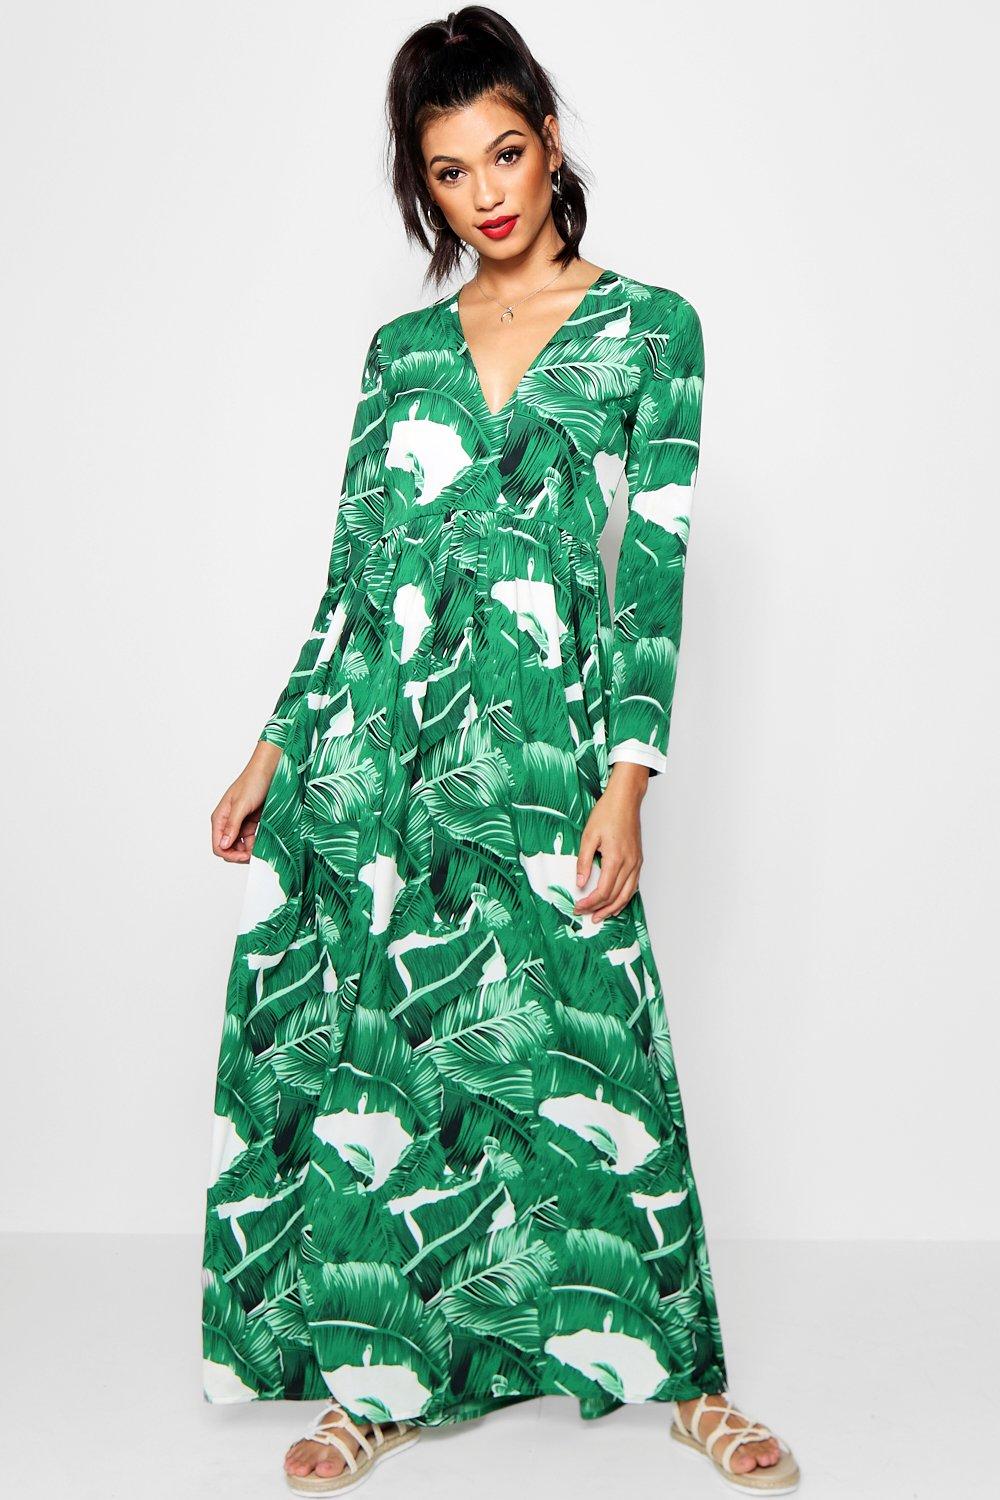 boohoo leaf dress